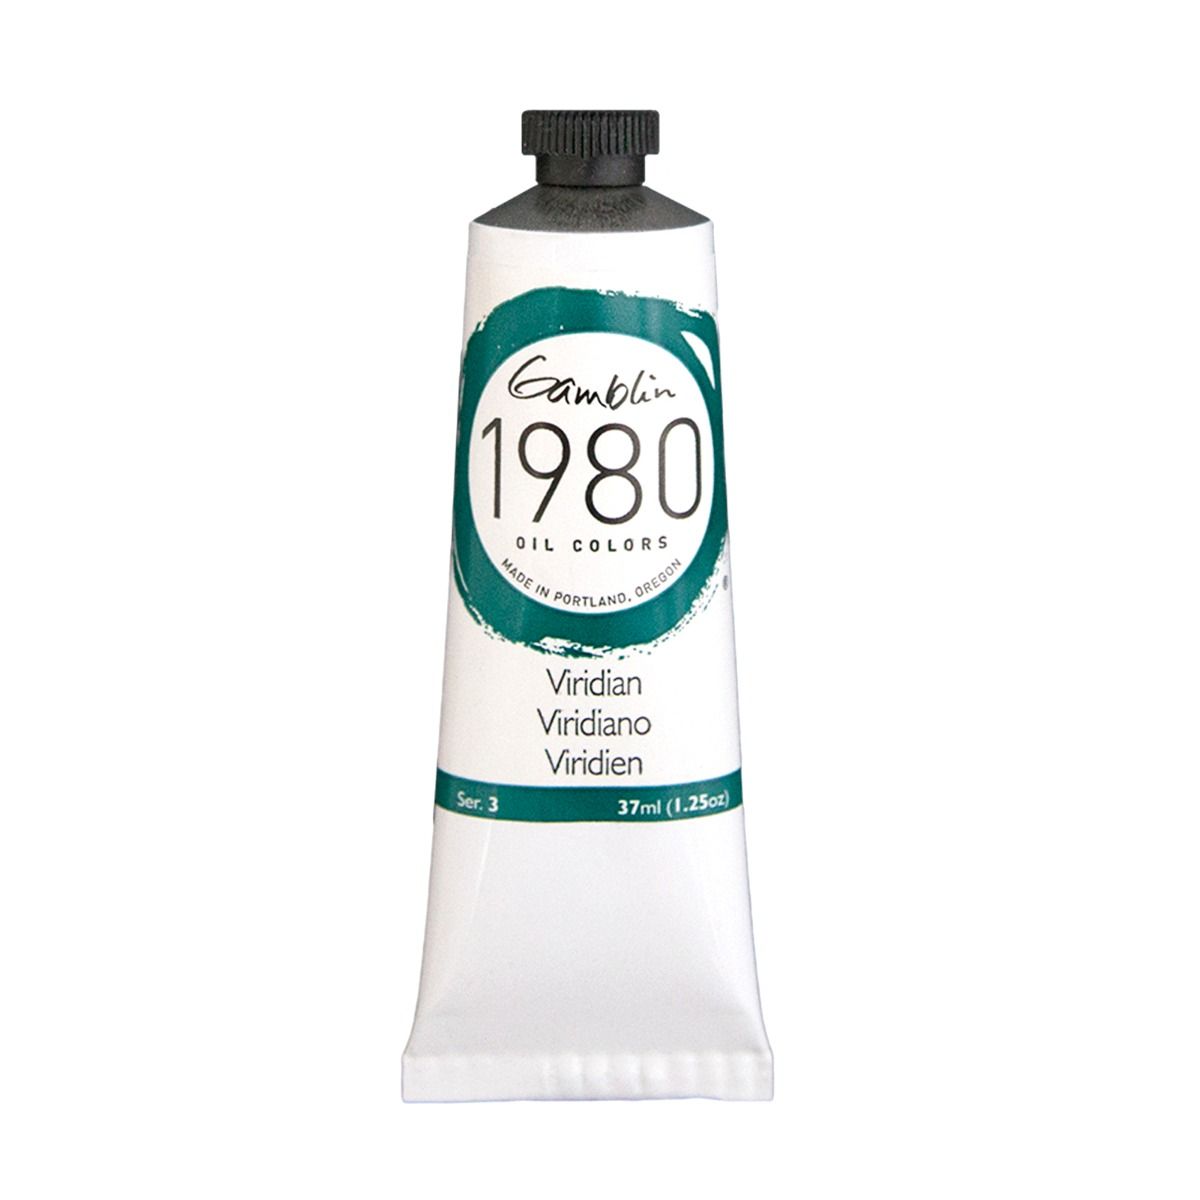 Gamblin 1980 Oils - Viridian, 37 ml (1.25oz)